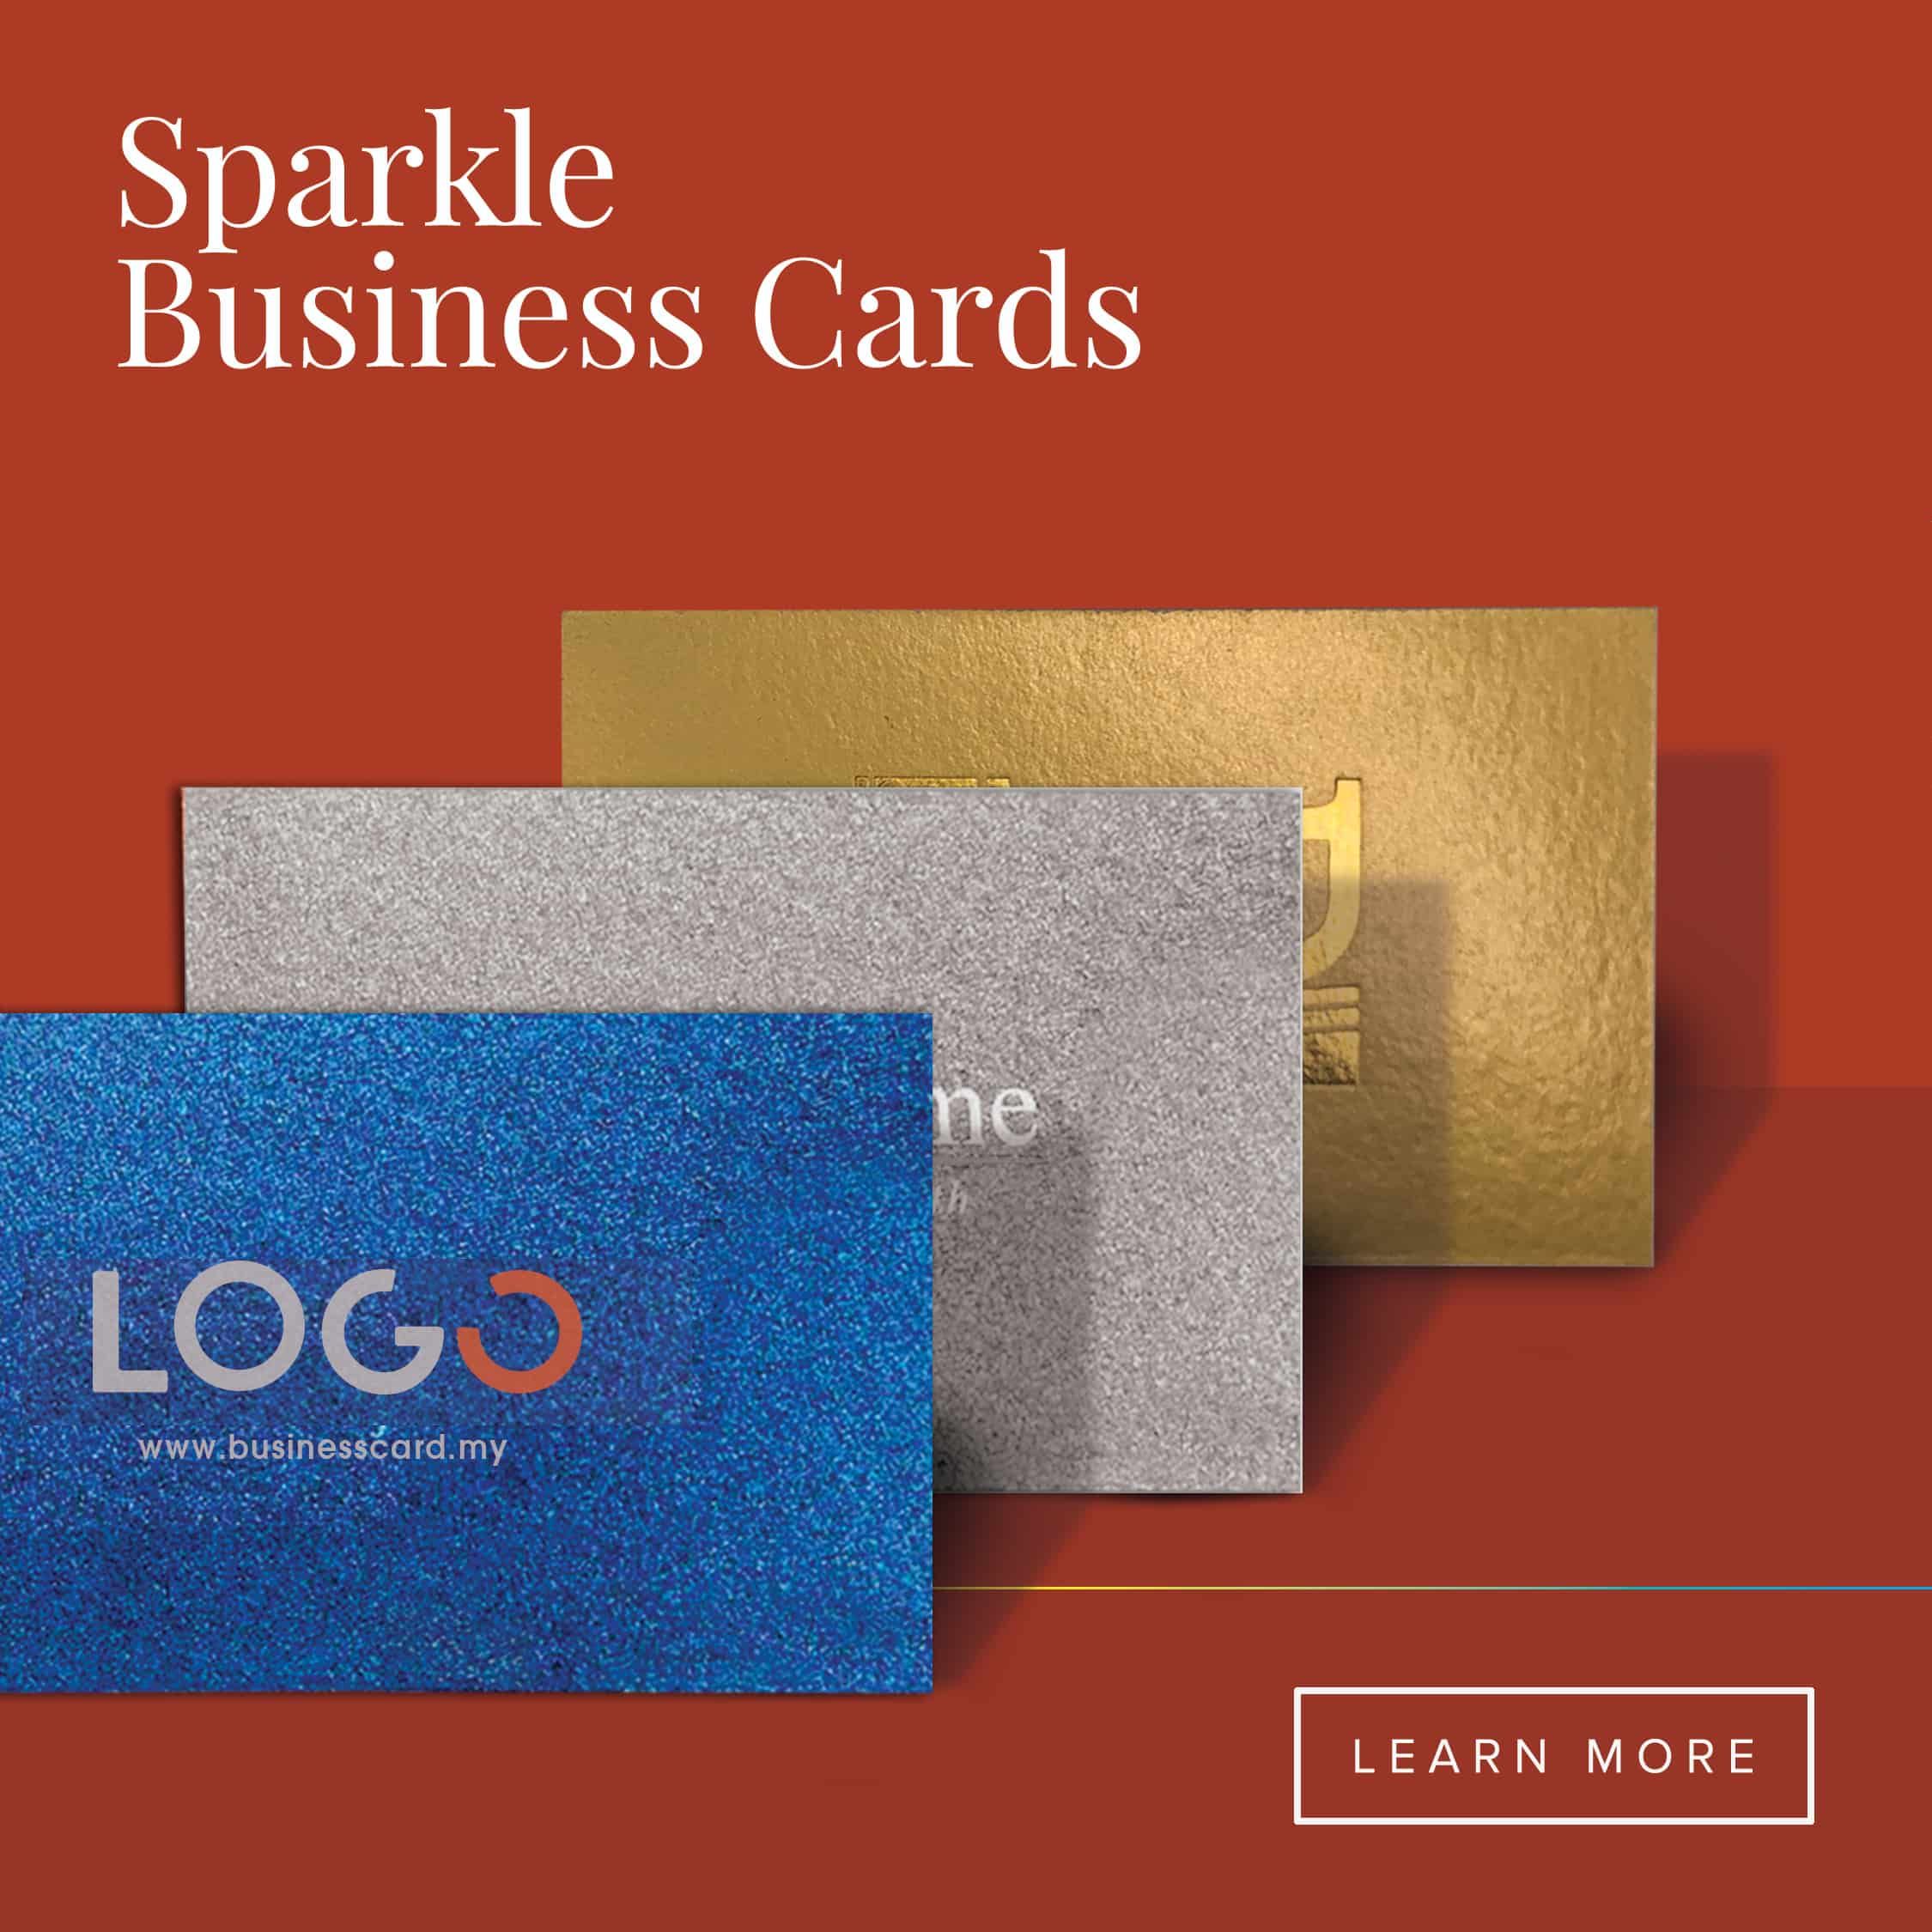 Sparkle Business Cards